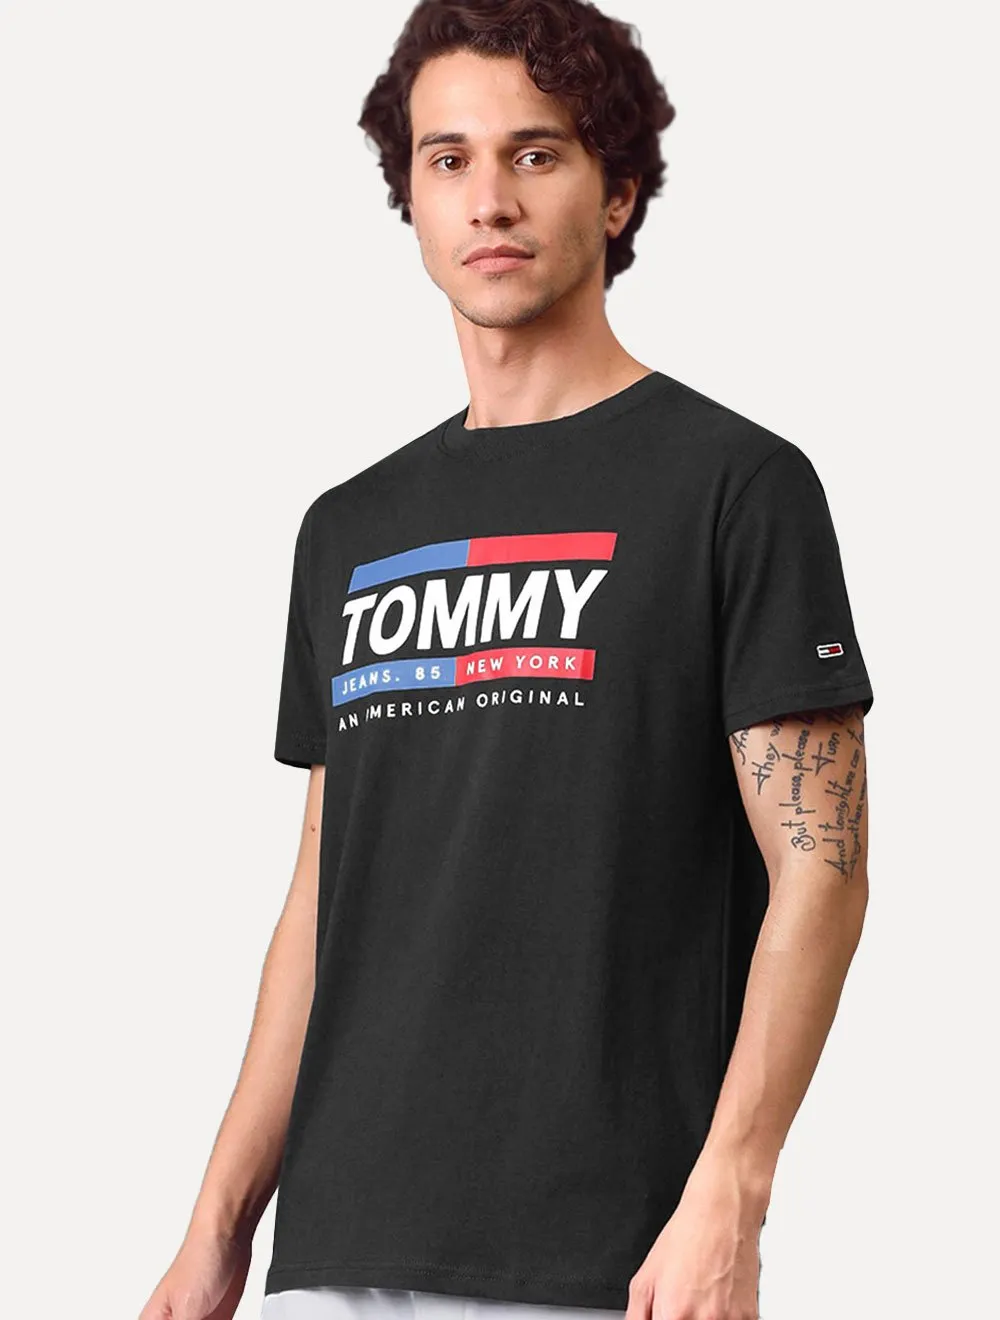 Camiseta Tommy Jeans Masculina American Original Stripes Preta